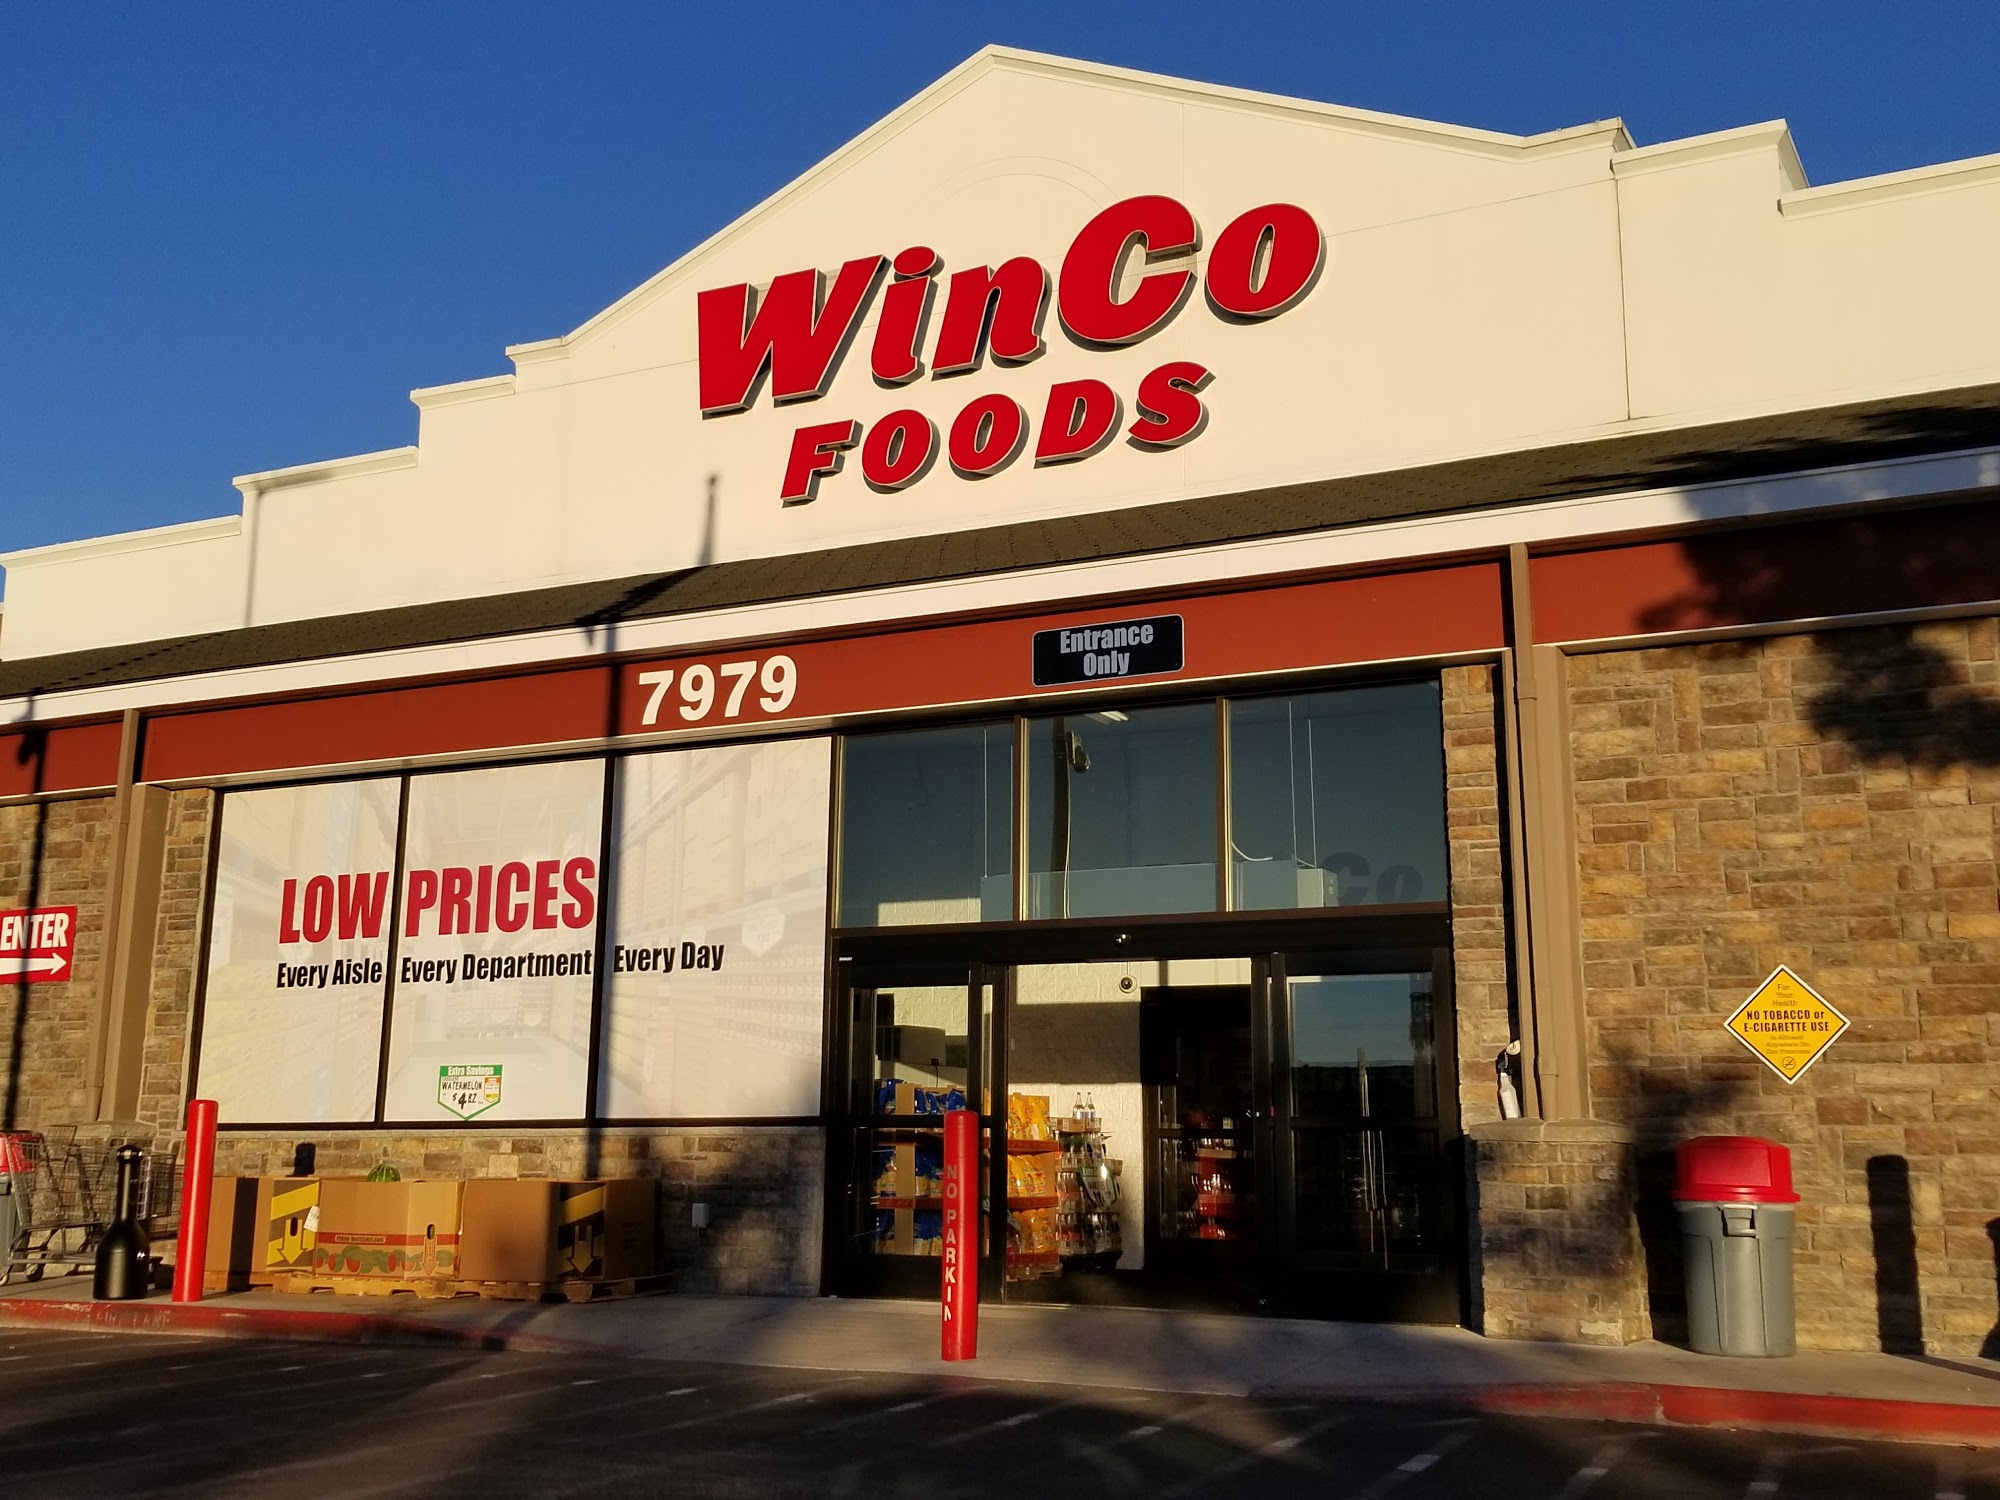 WinCo Foods